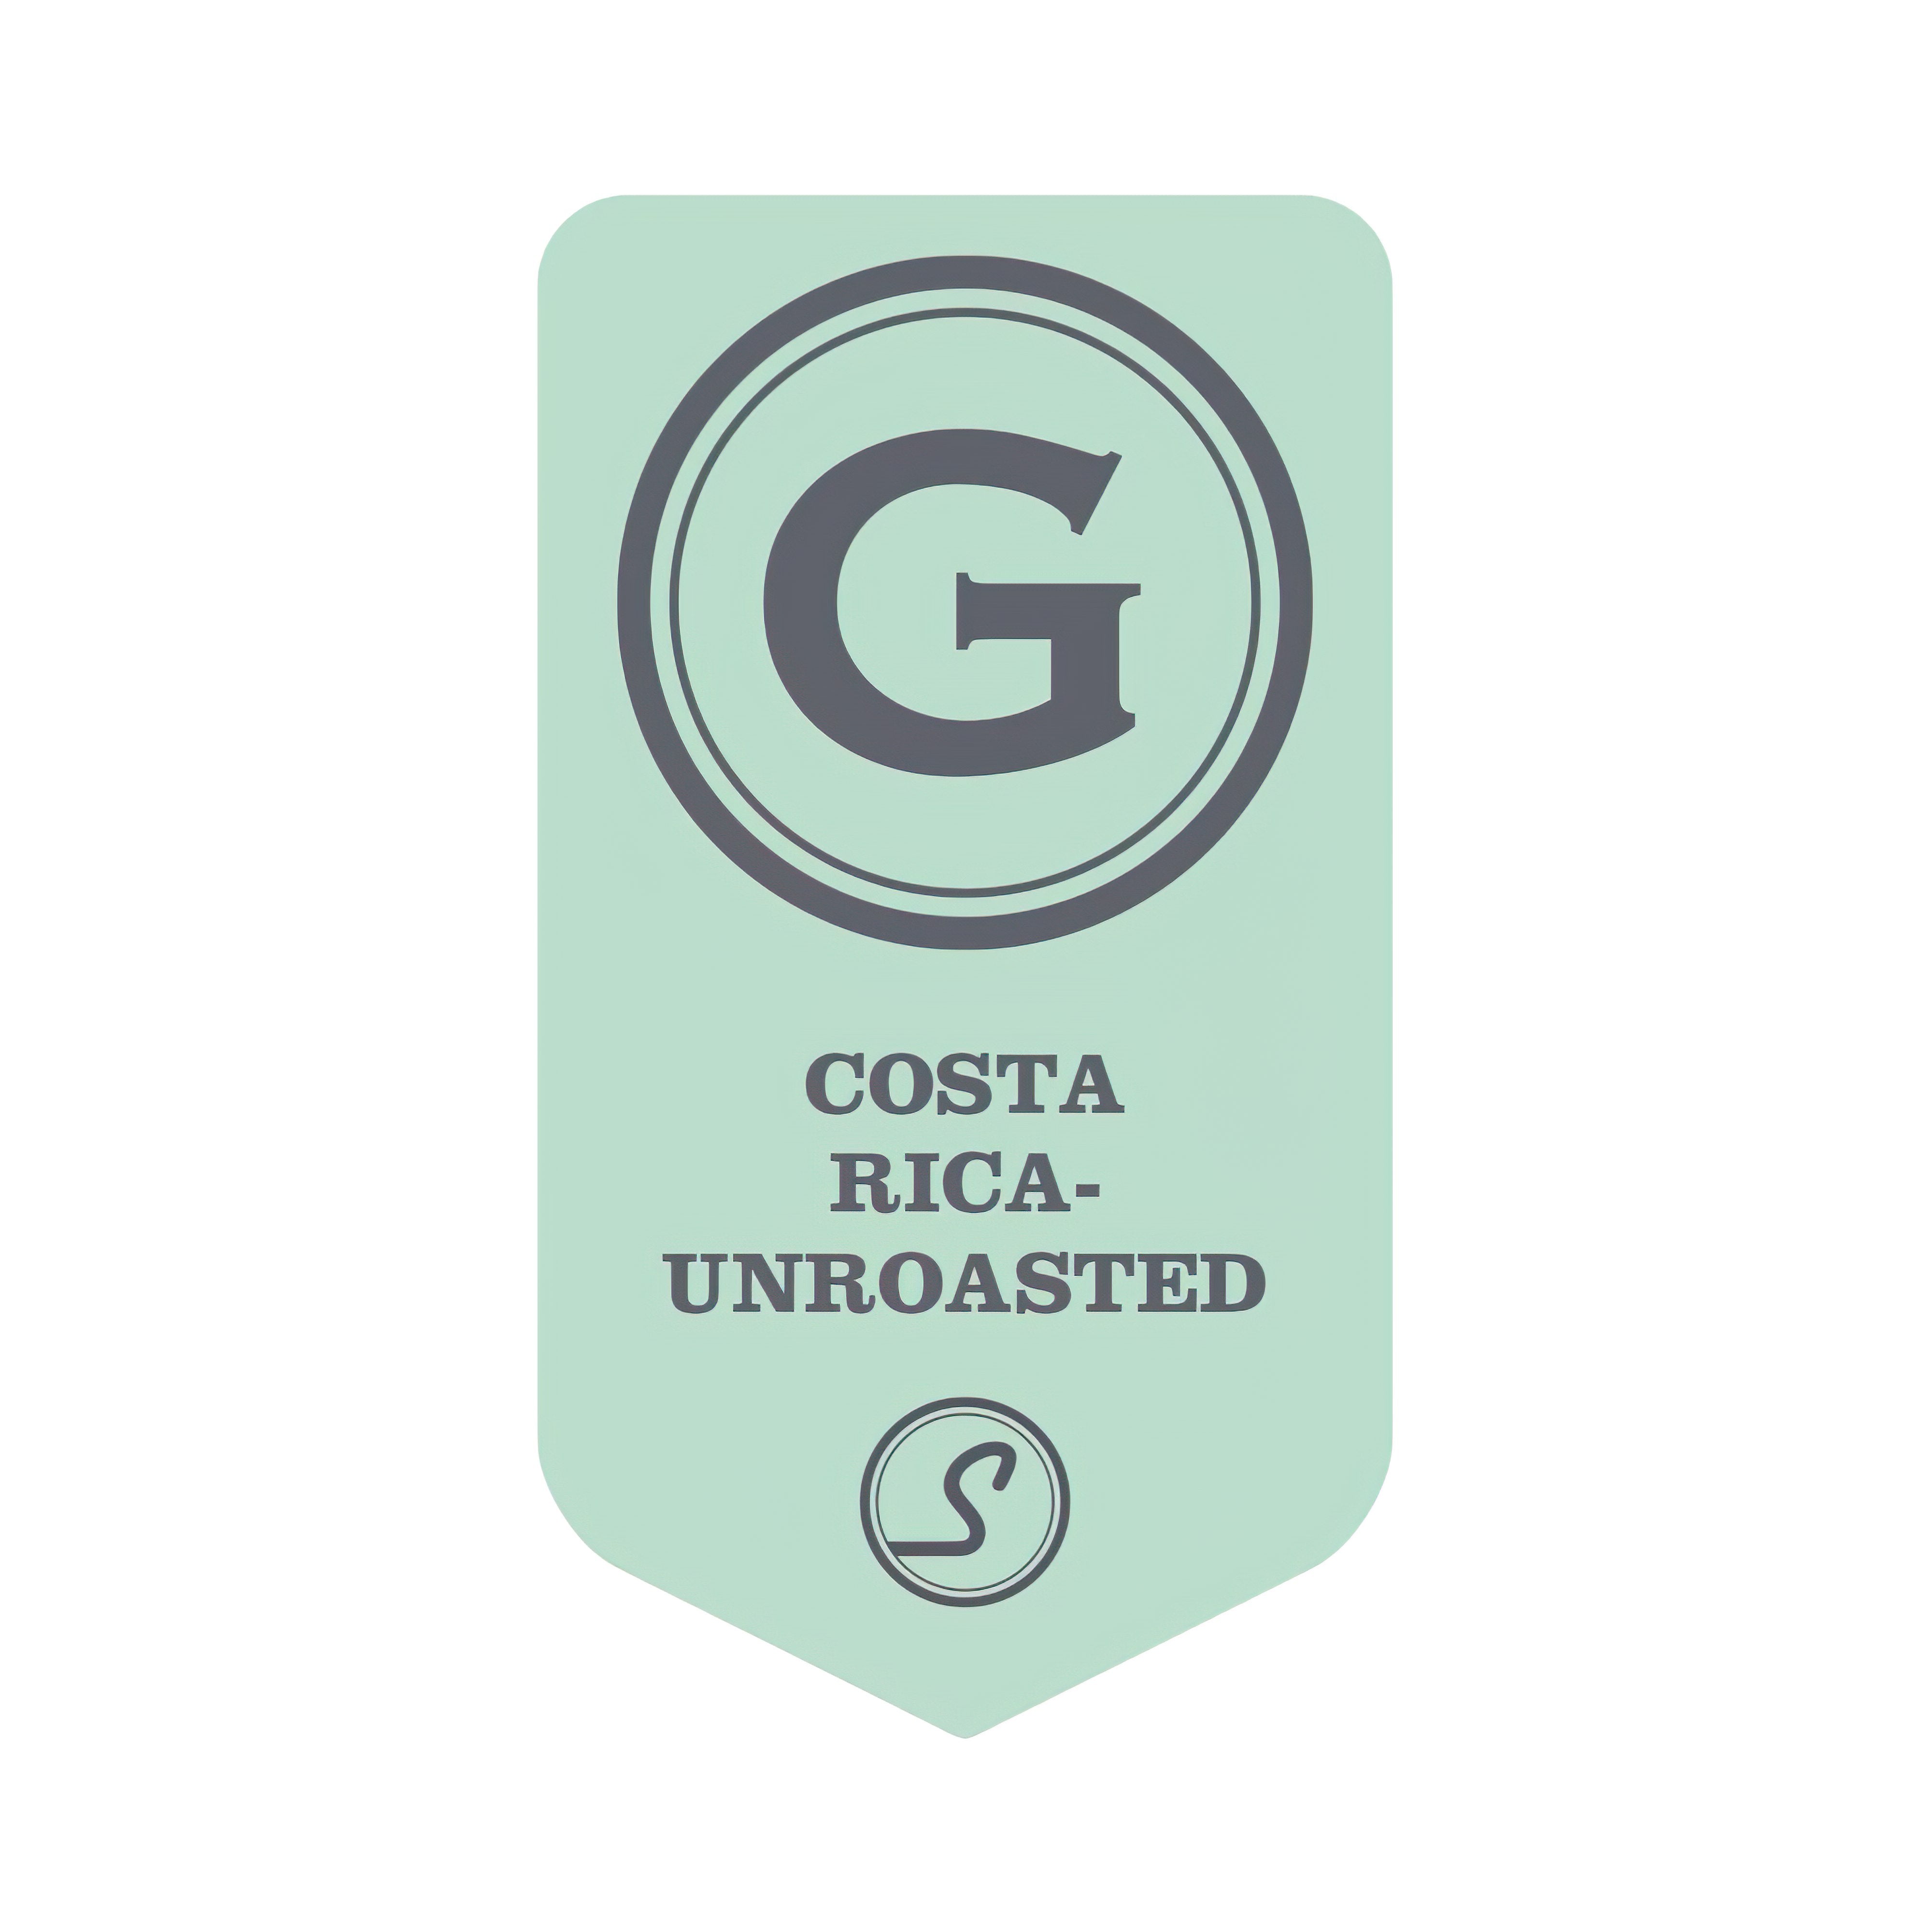 Costa Rica - UNROASTED